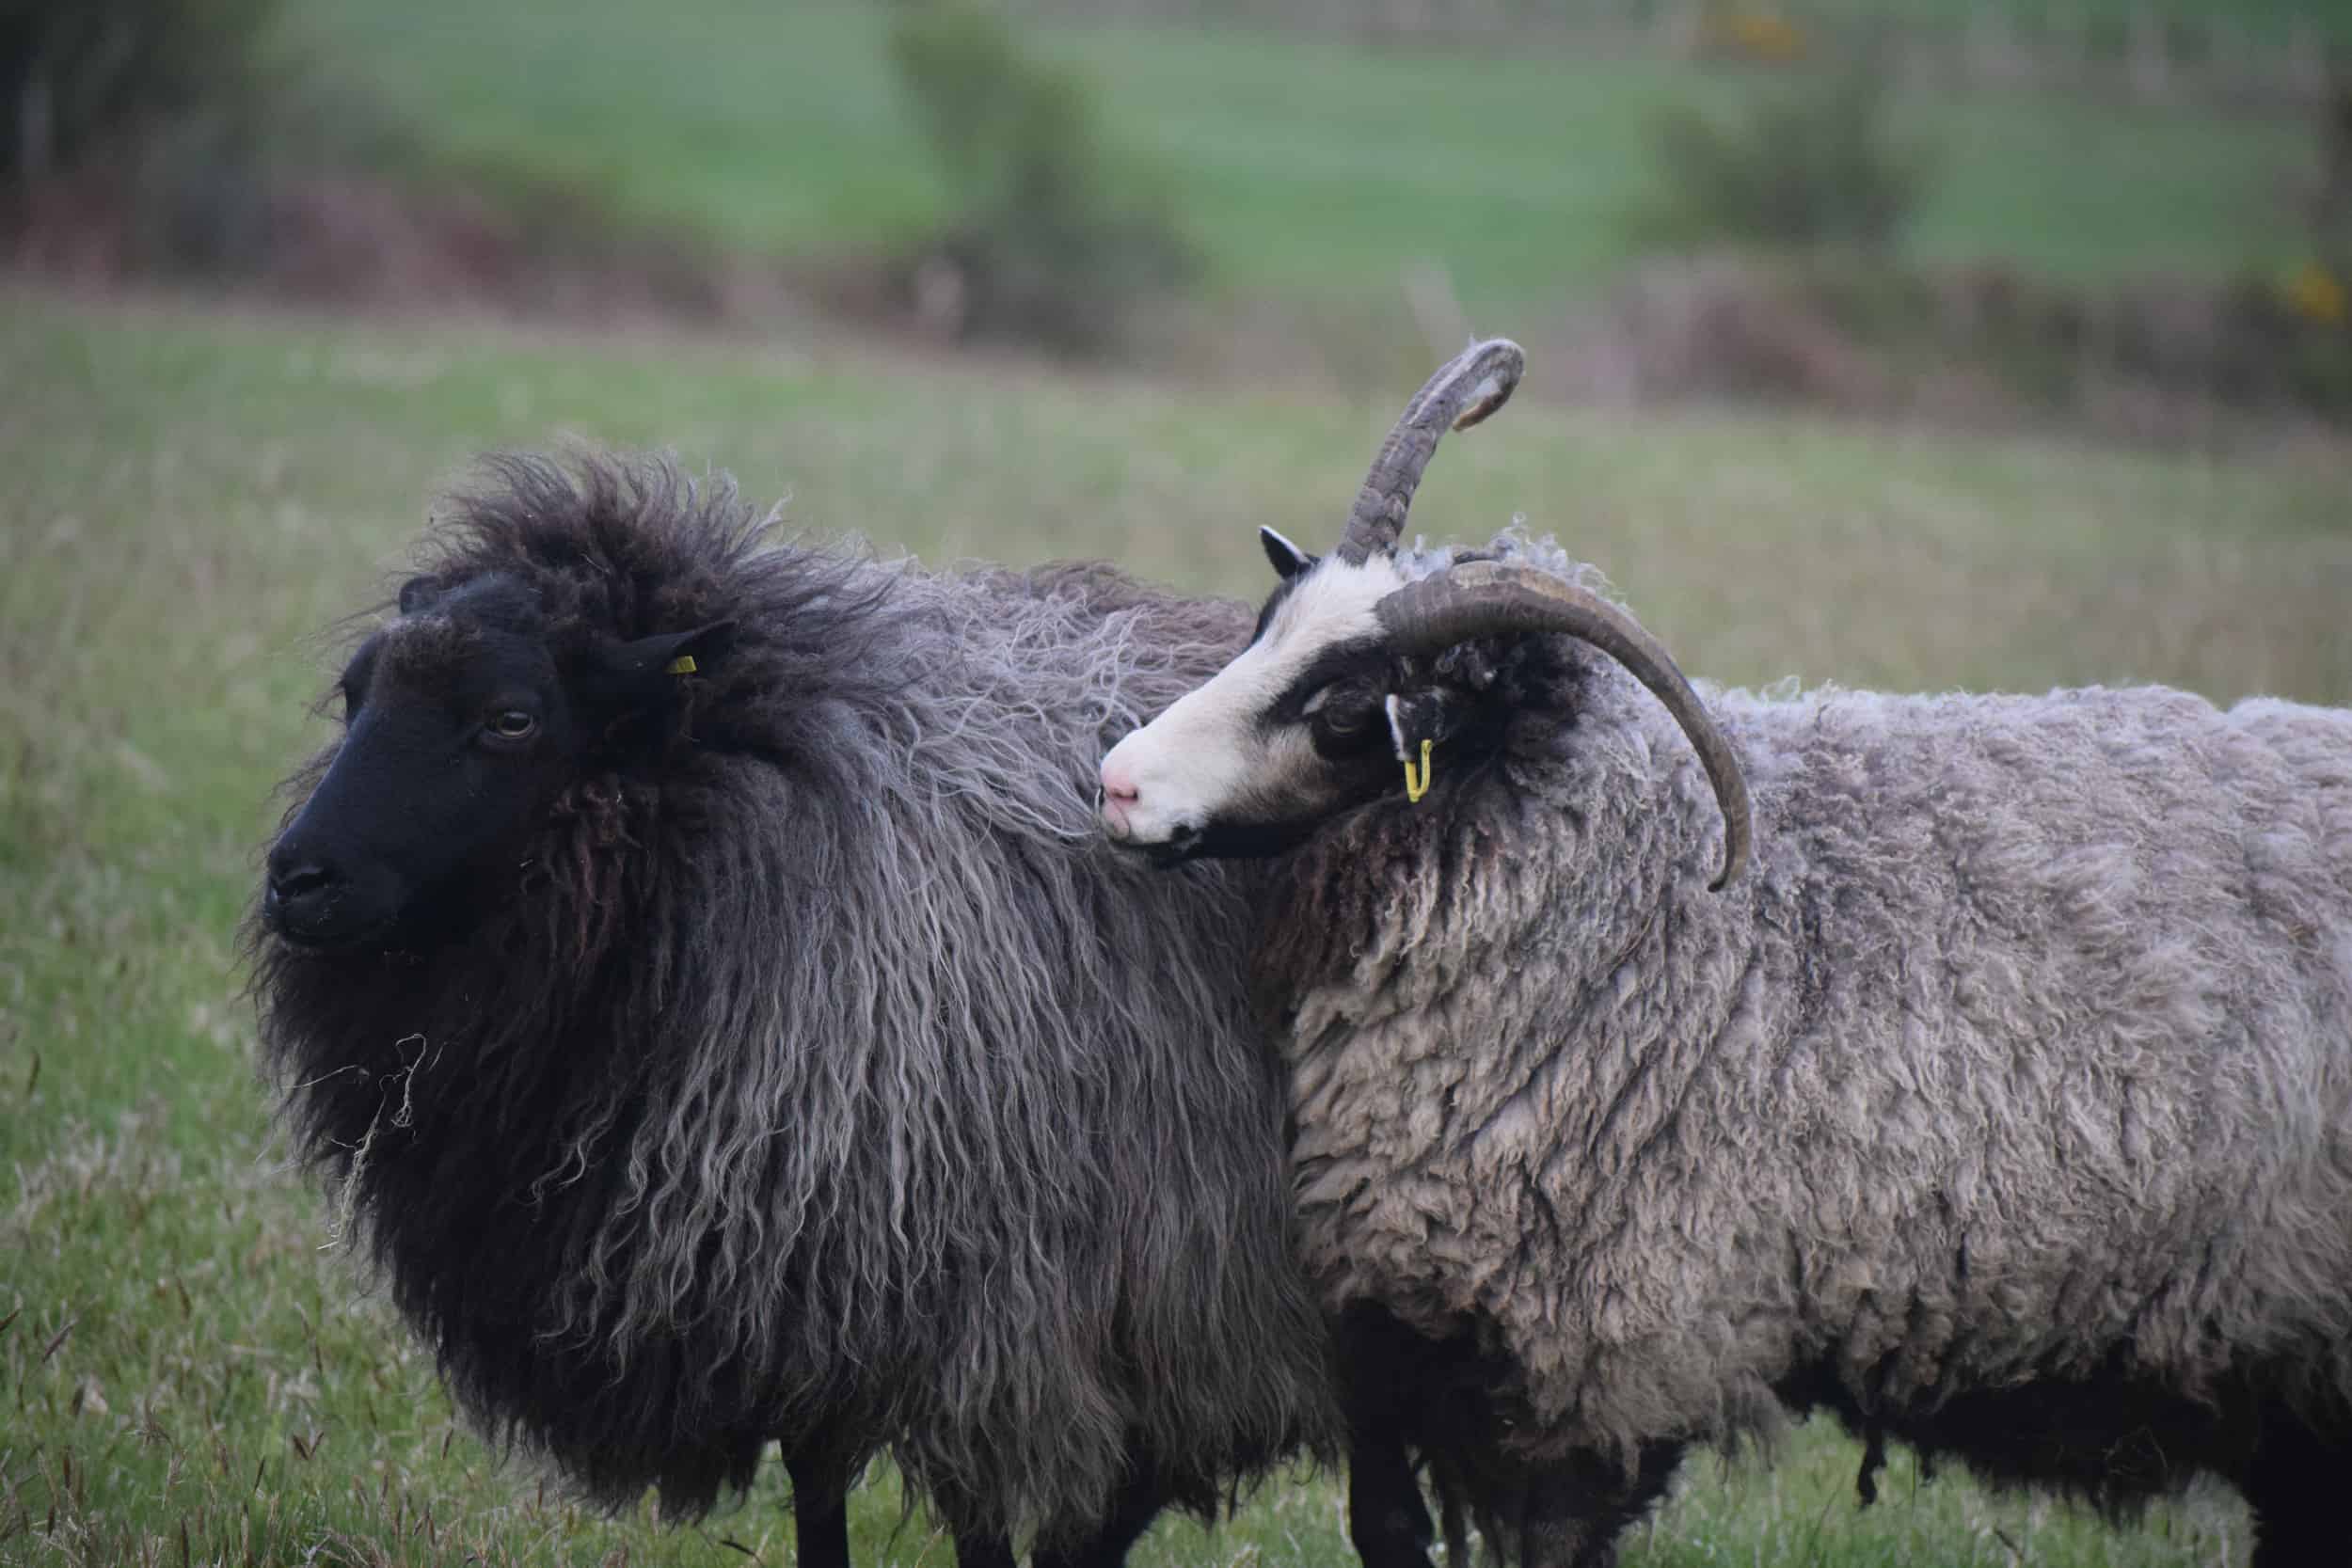 Poppy gem sheep playing katmoget badgerface shetland cross jacob sheep lamb cute